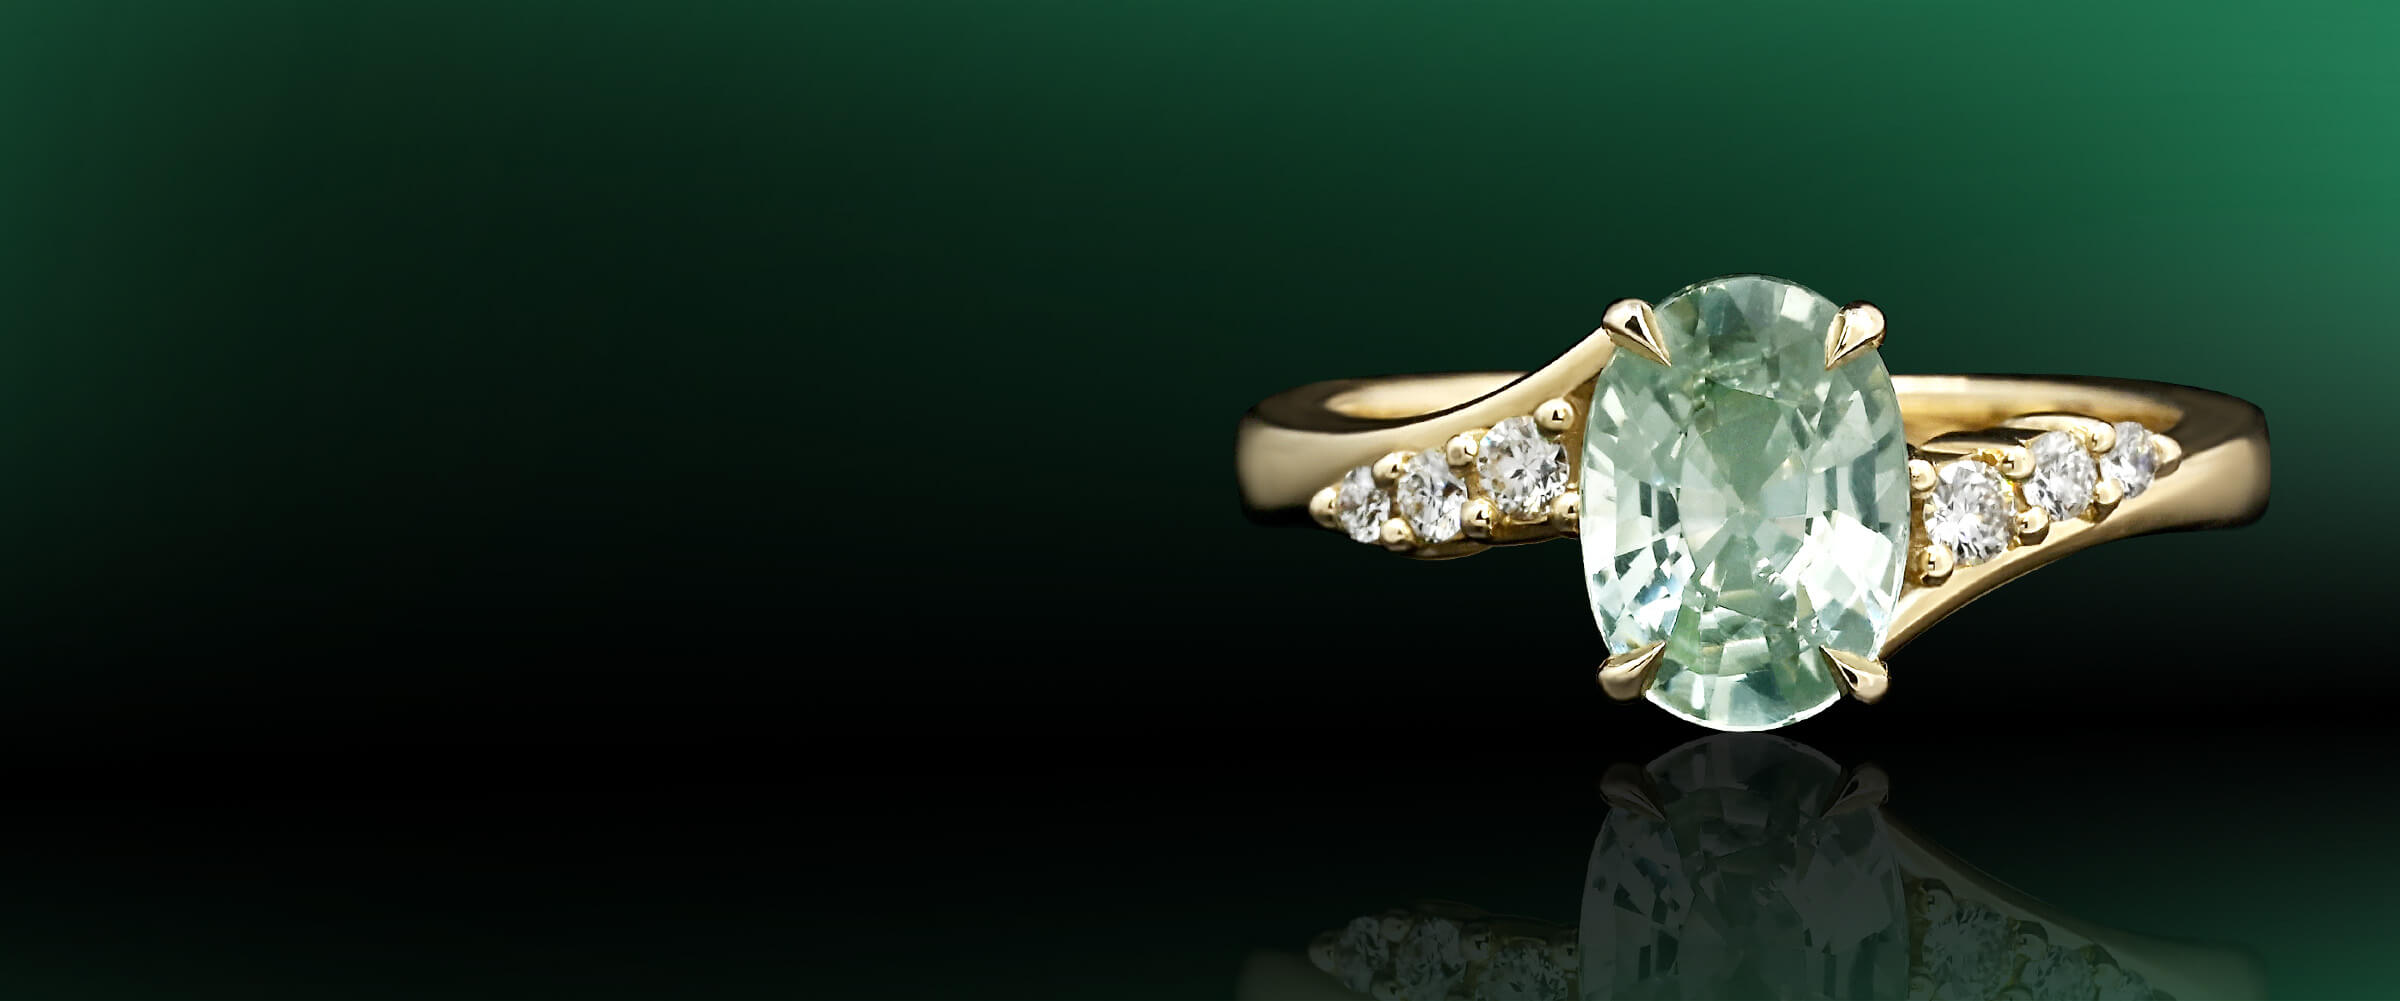 Lucy Diamond Engagement Ring -18K White Gold, Hidden Halo, 2 Carat, – Best  Brilliance